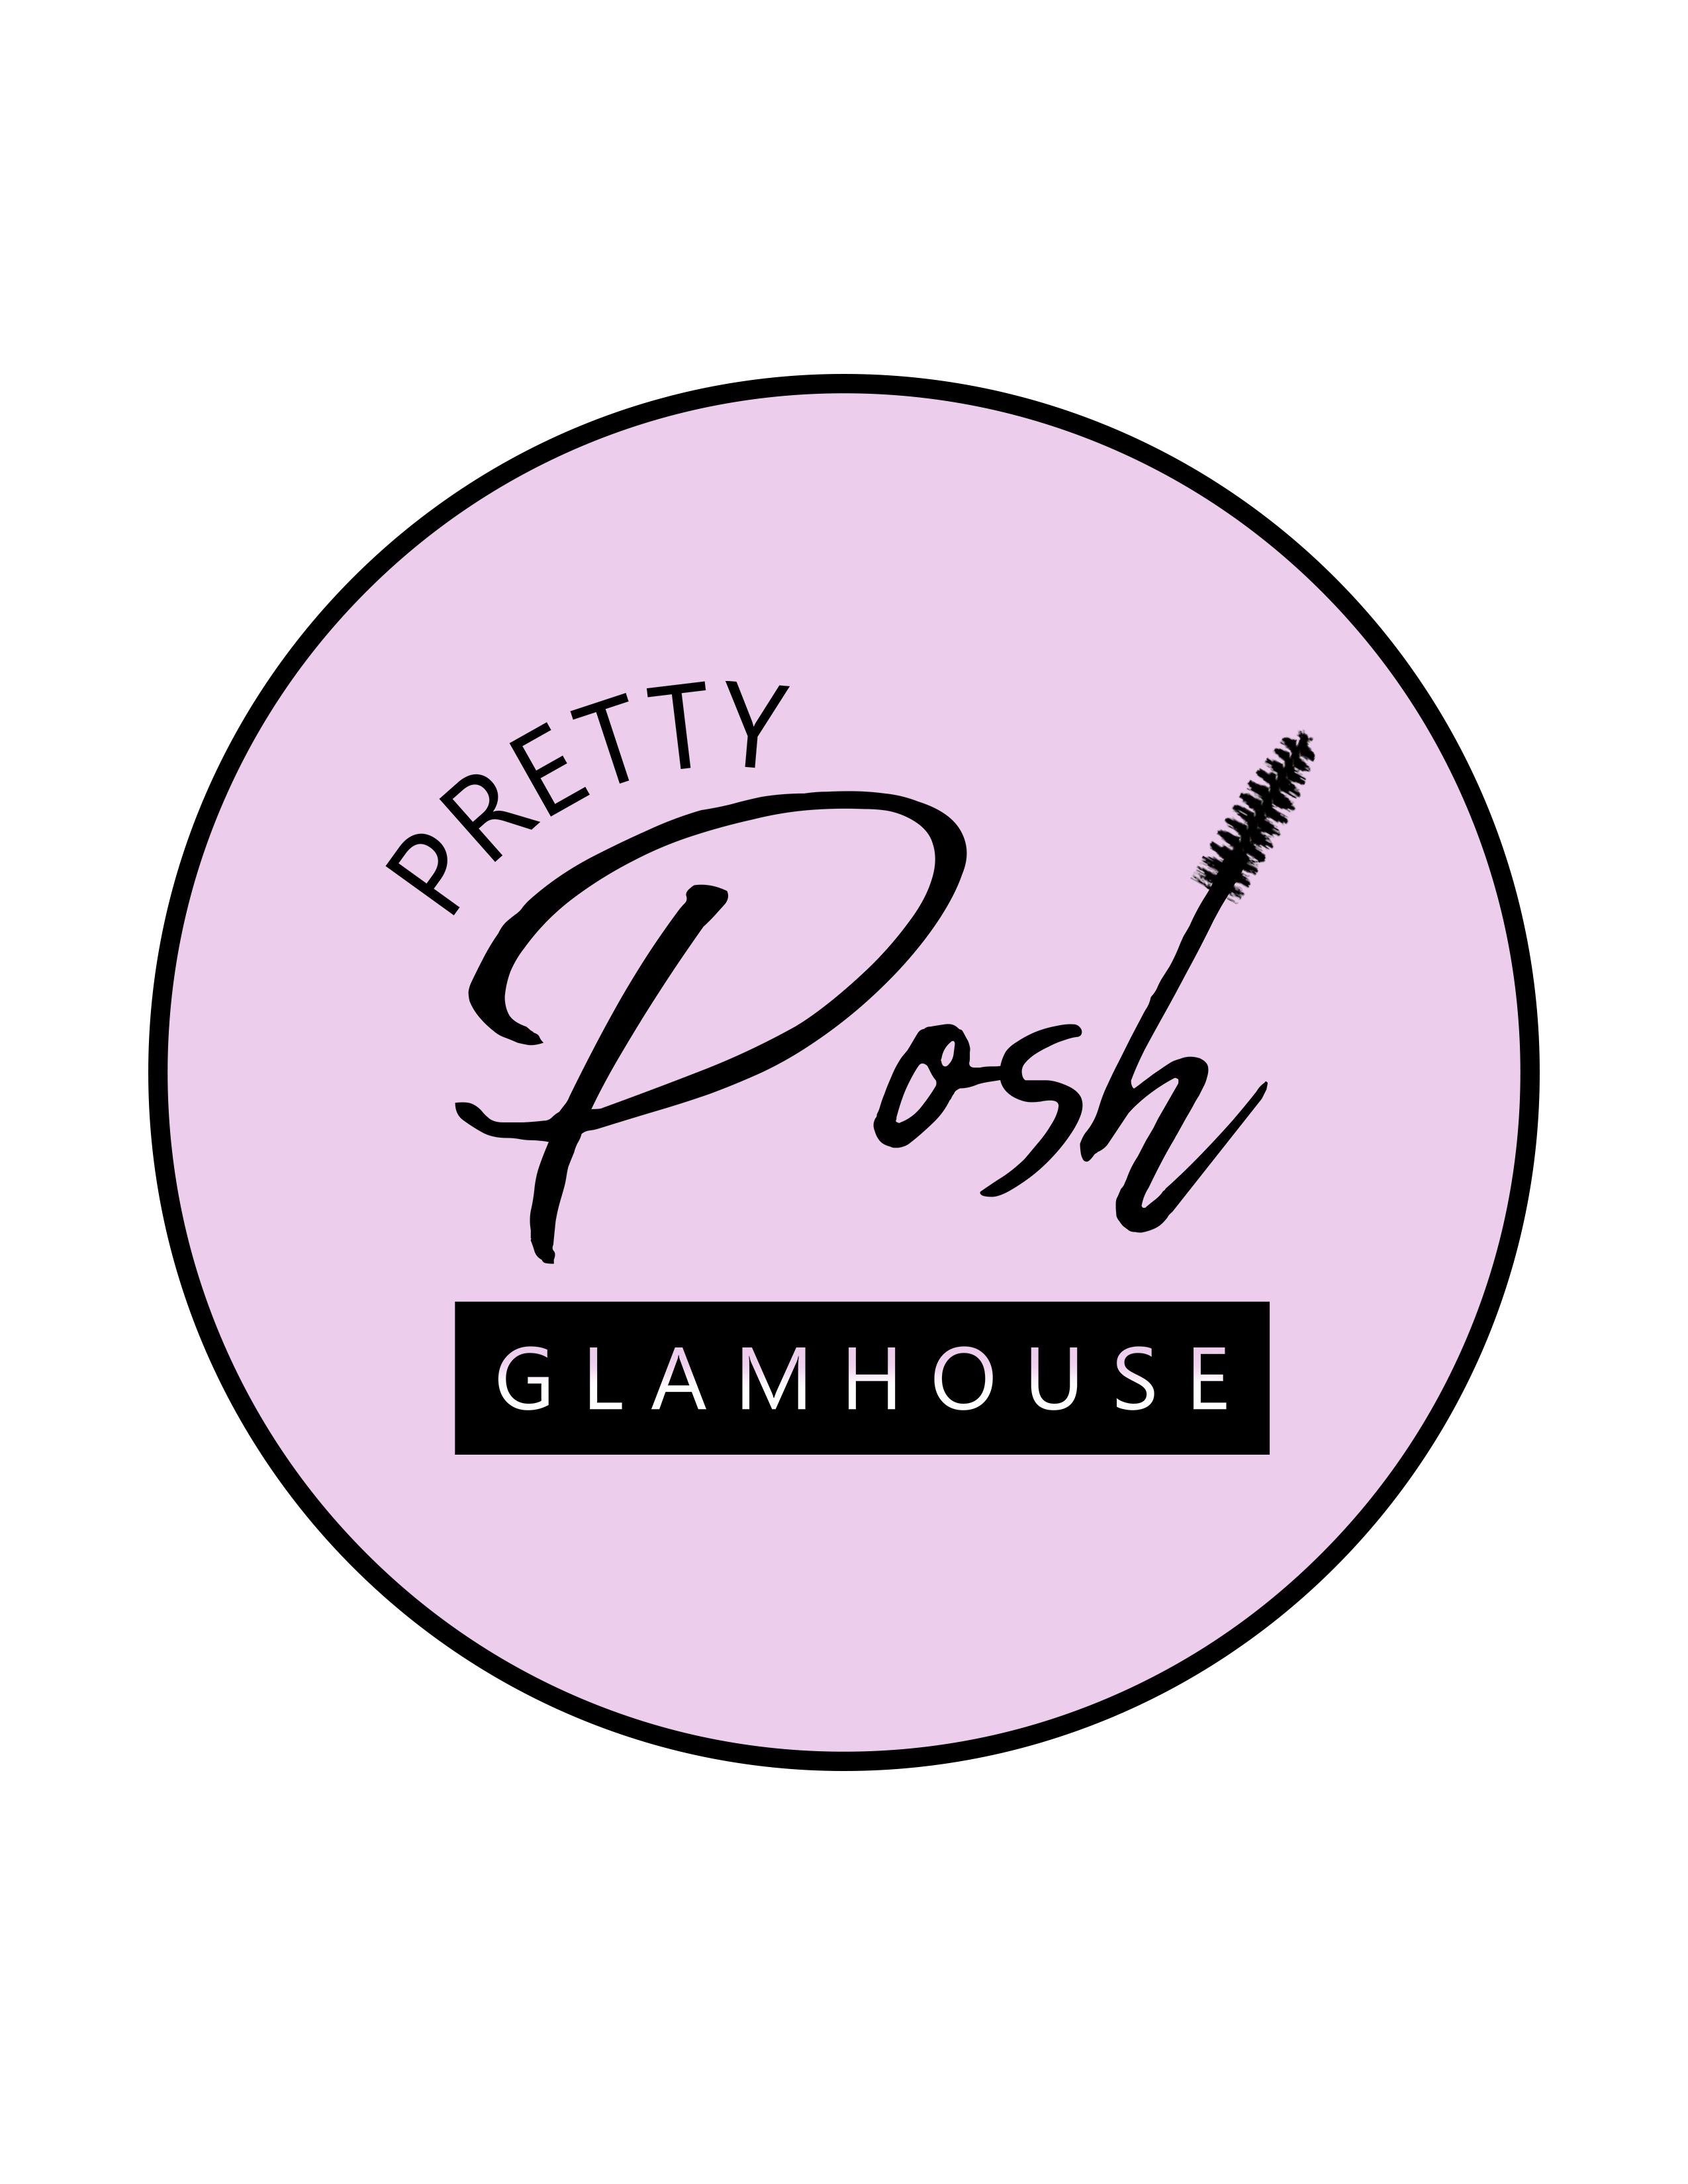 Pretty Posh Glamhouse-logo.jpg